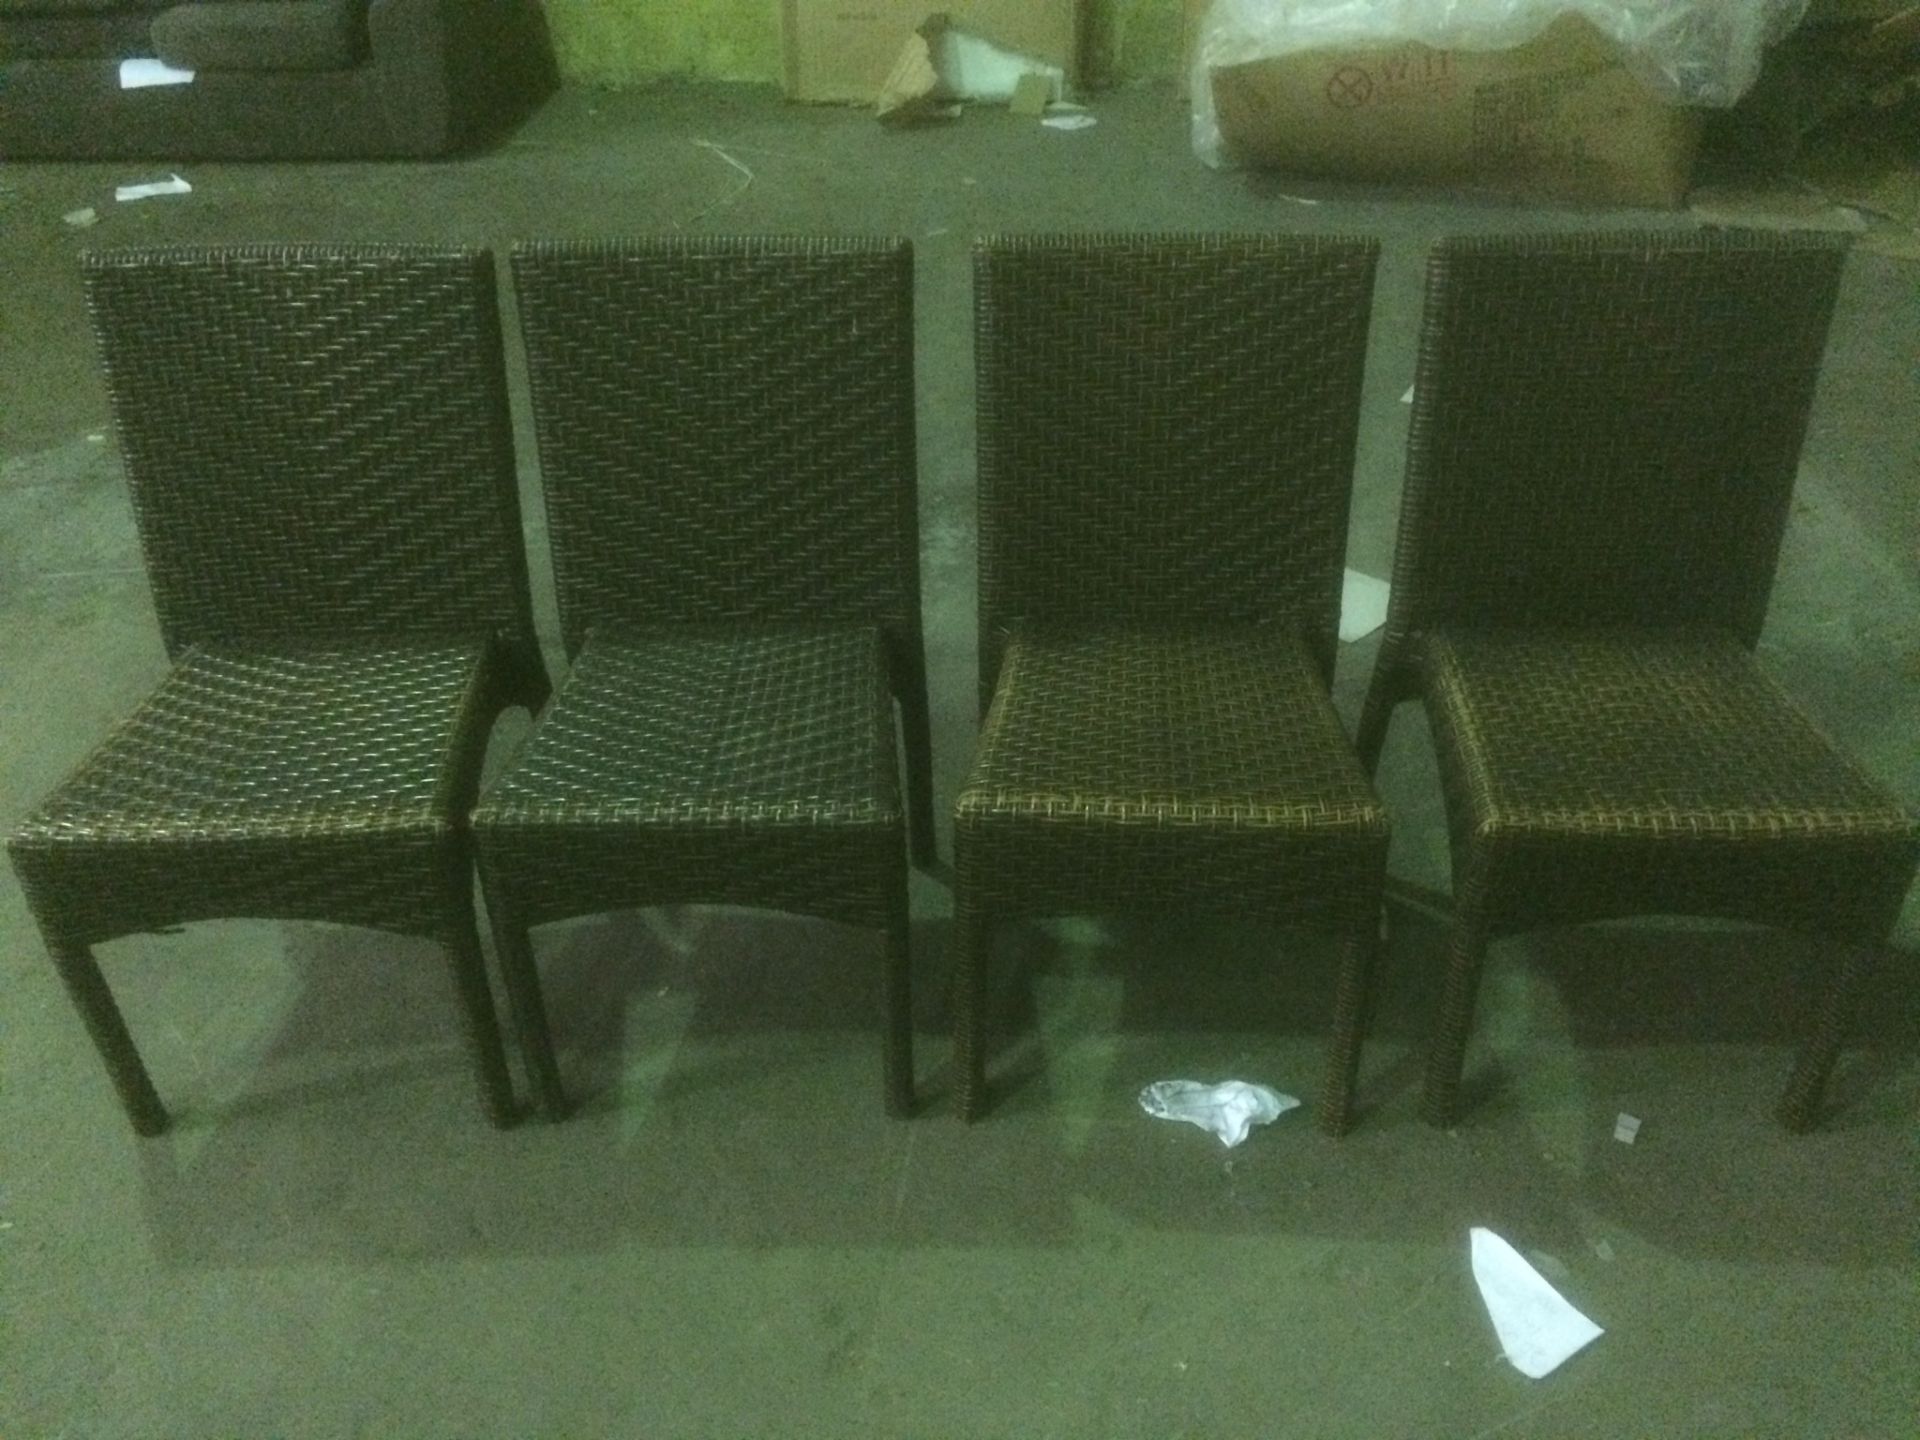 6 x brown woven cane garden chairs